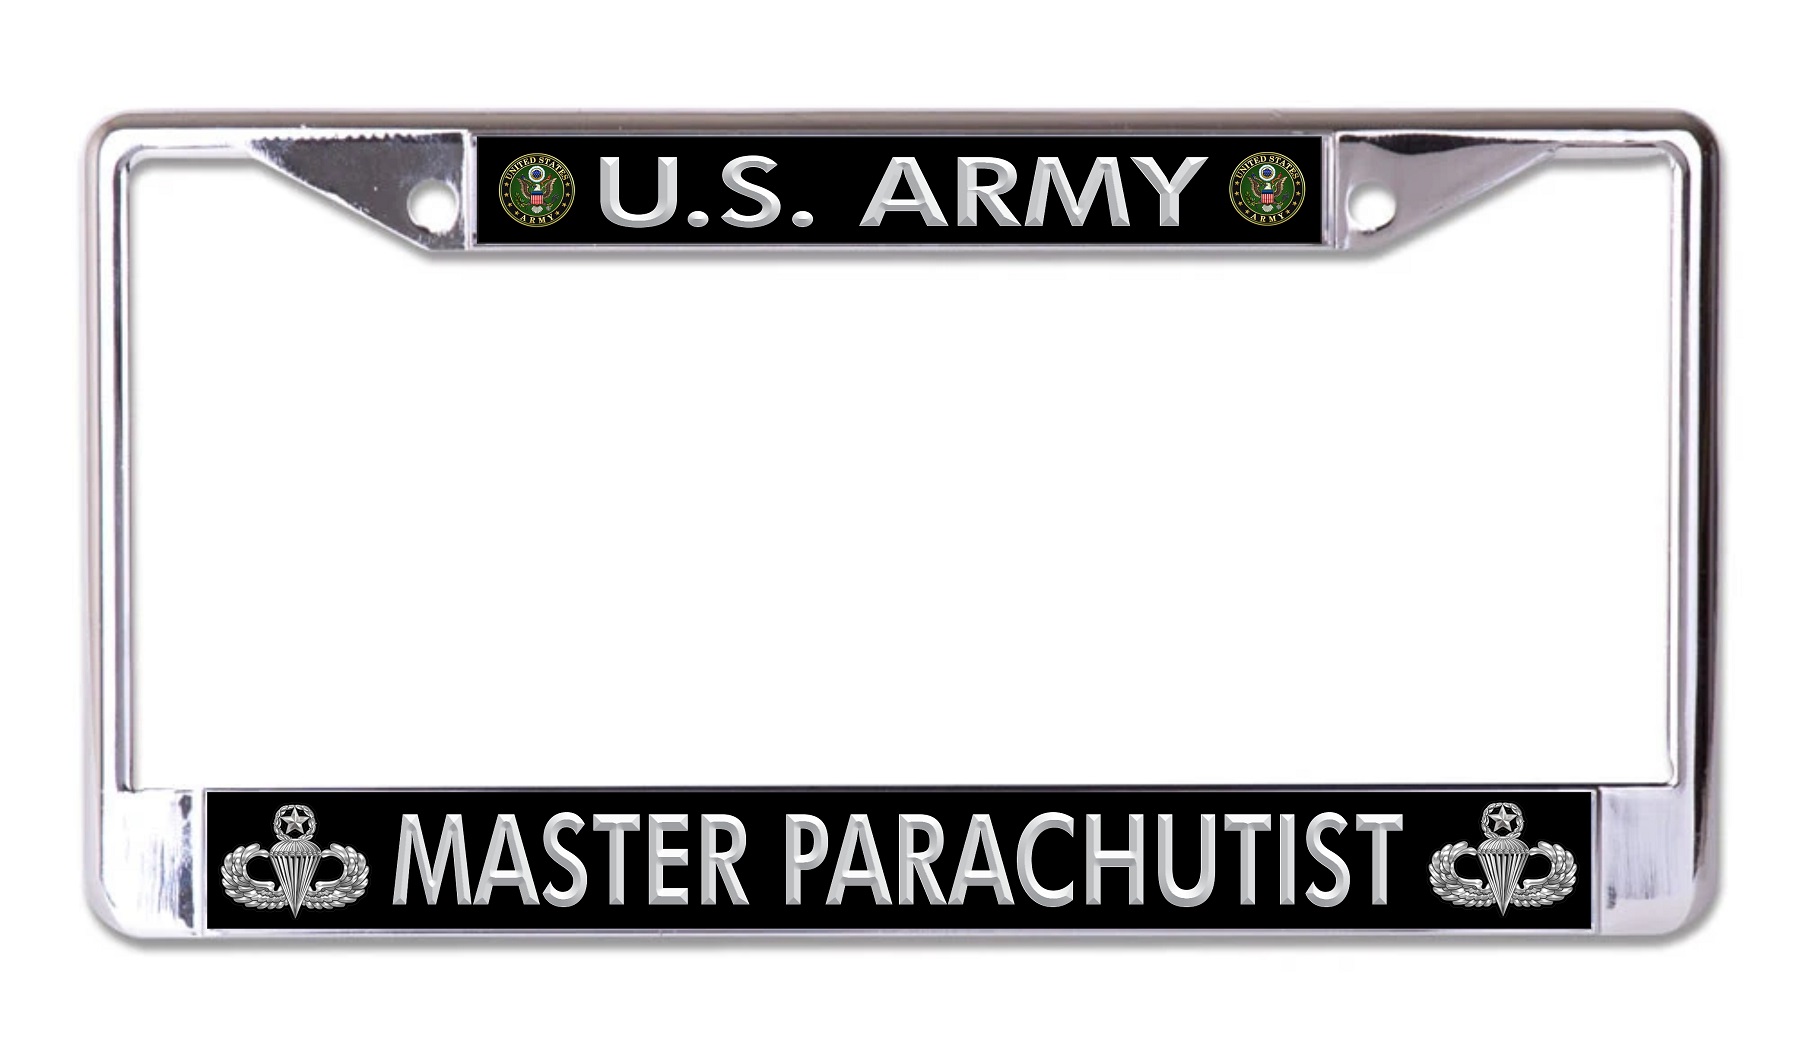 U.S. Army Master Parachutist Chrome License Plate FRAME